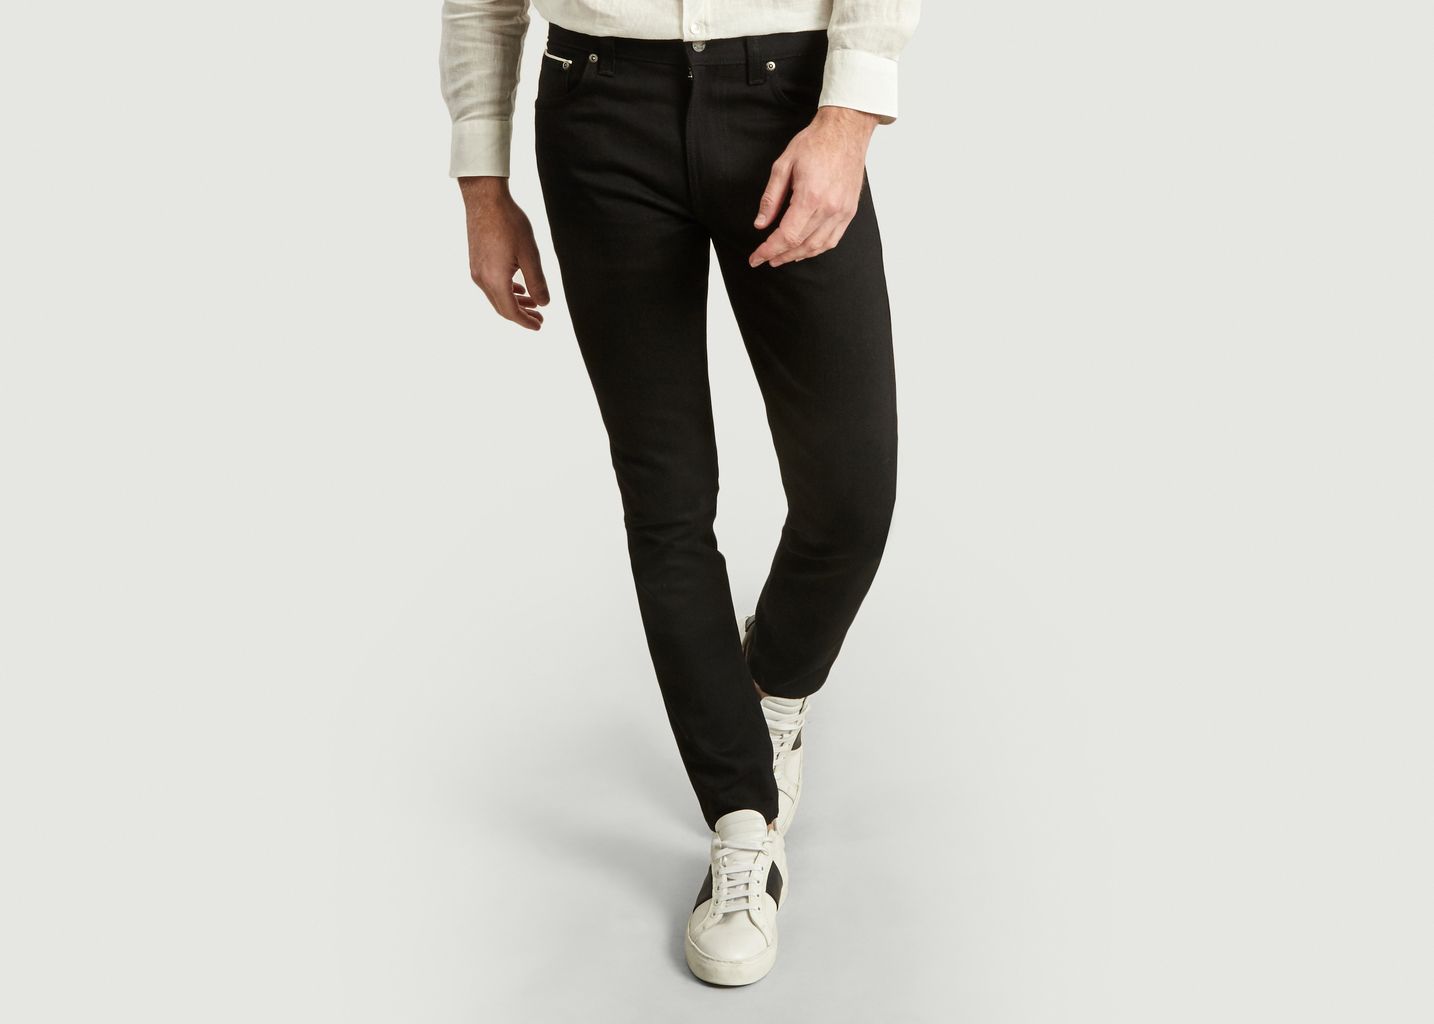 Nudie Jeans 12 75 Oz Black Organic Cotton Lean Dean Jeans